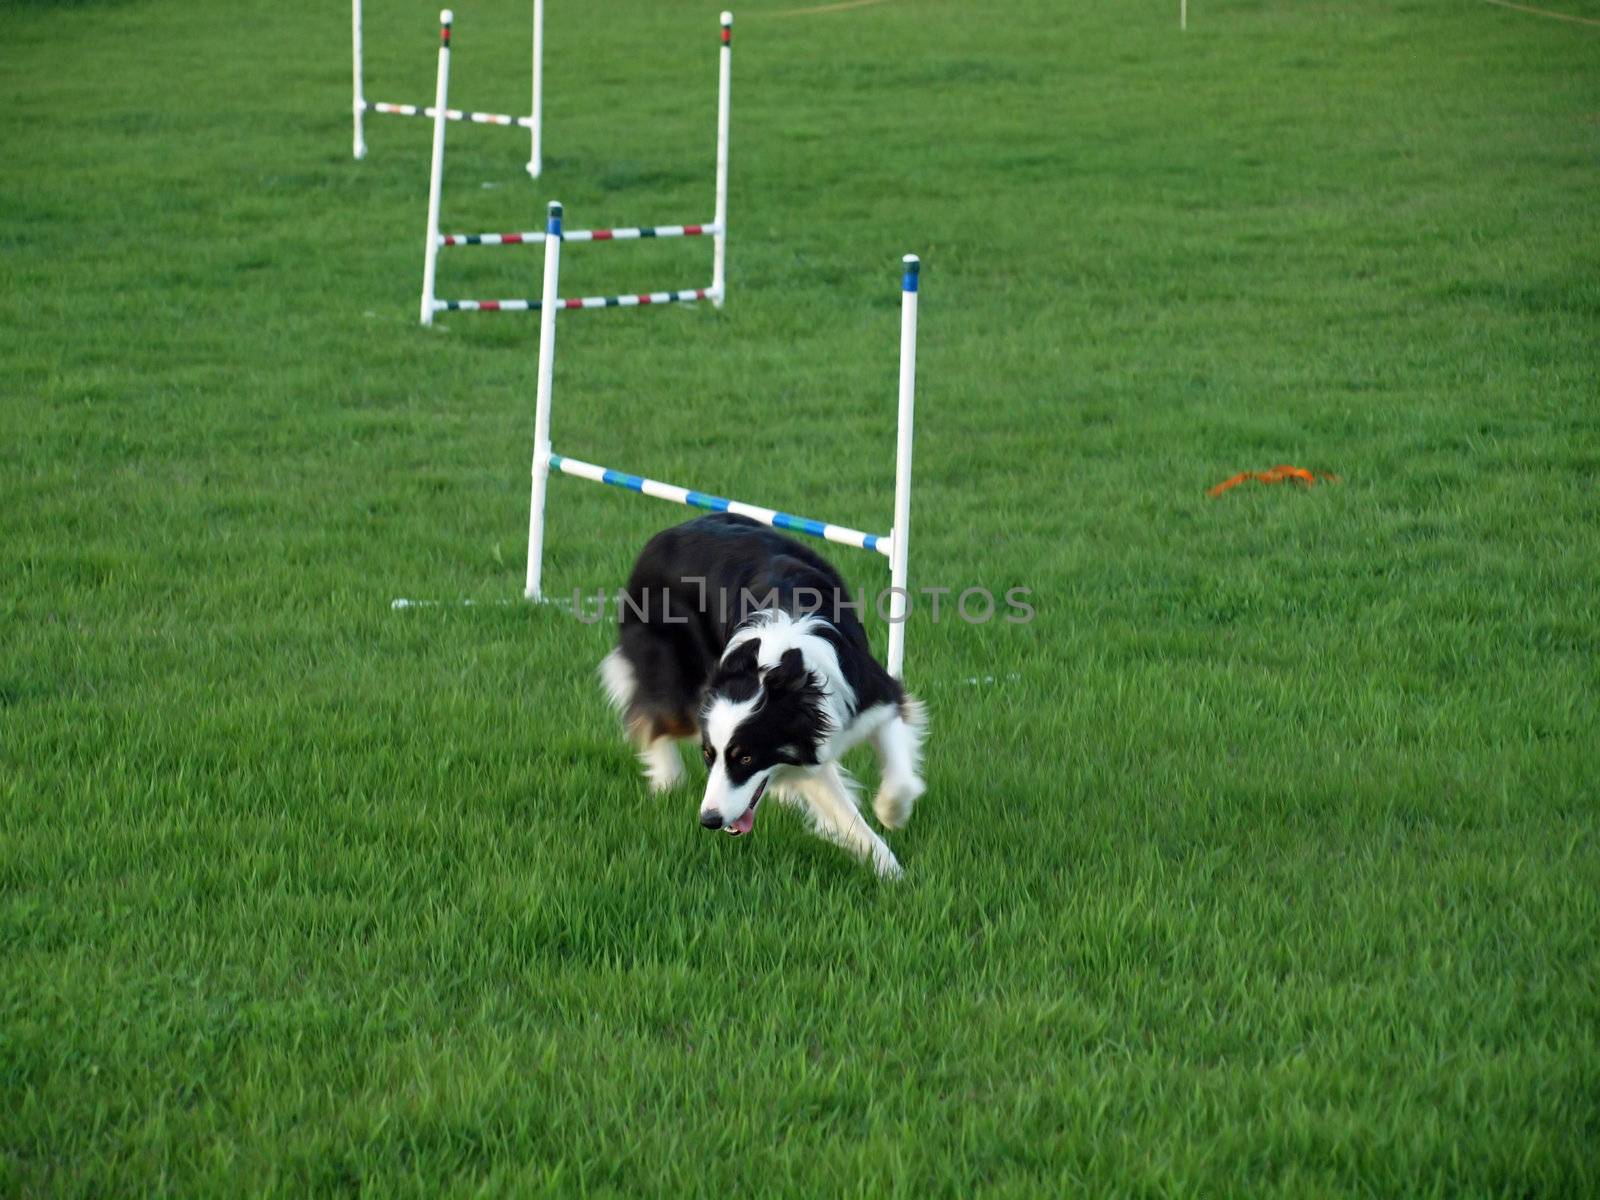 Dog Jumping at an Agility Training